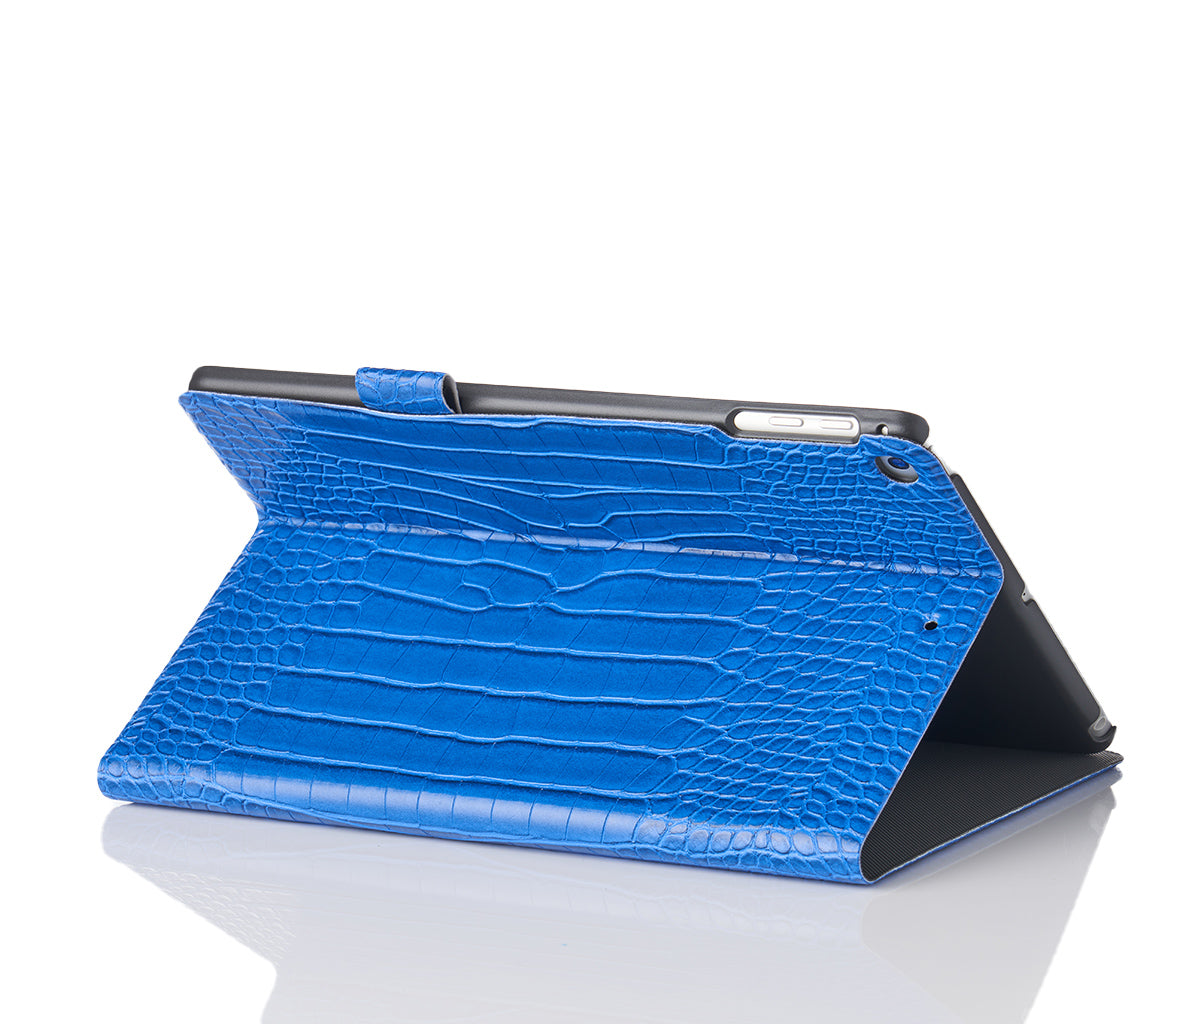 Chic Geeks Faux Crocodile Ipad Mini Case - 4th & 5th Generation In Black